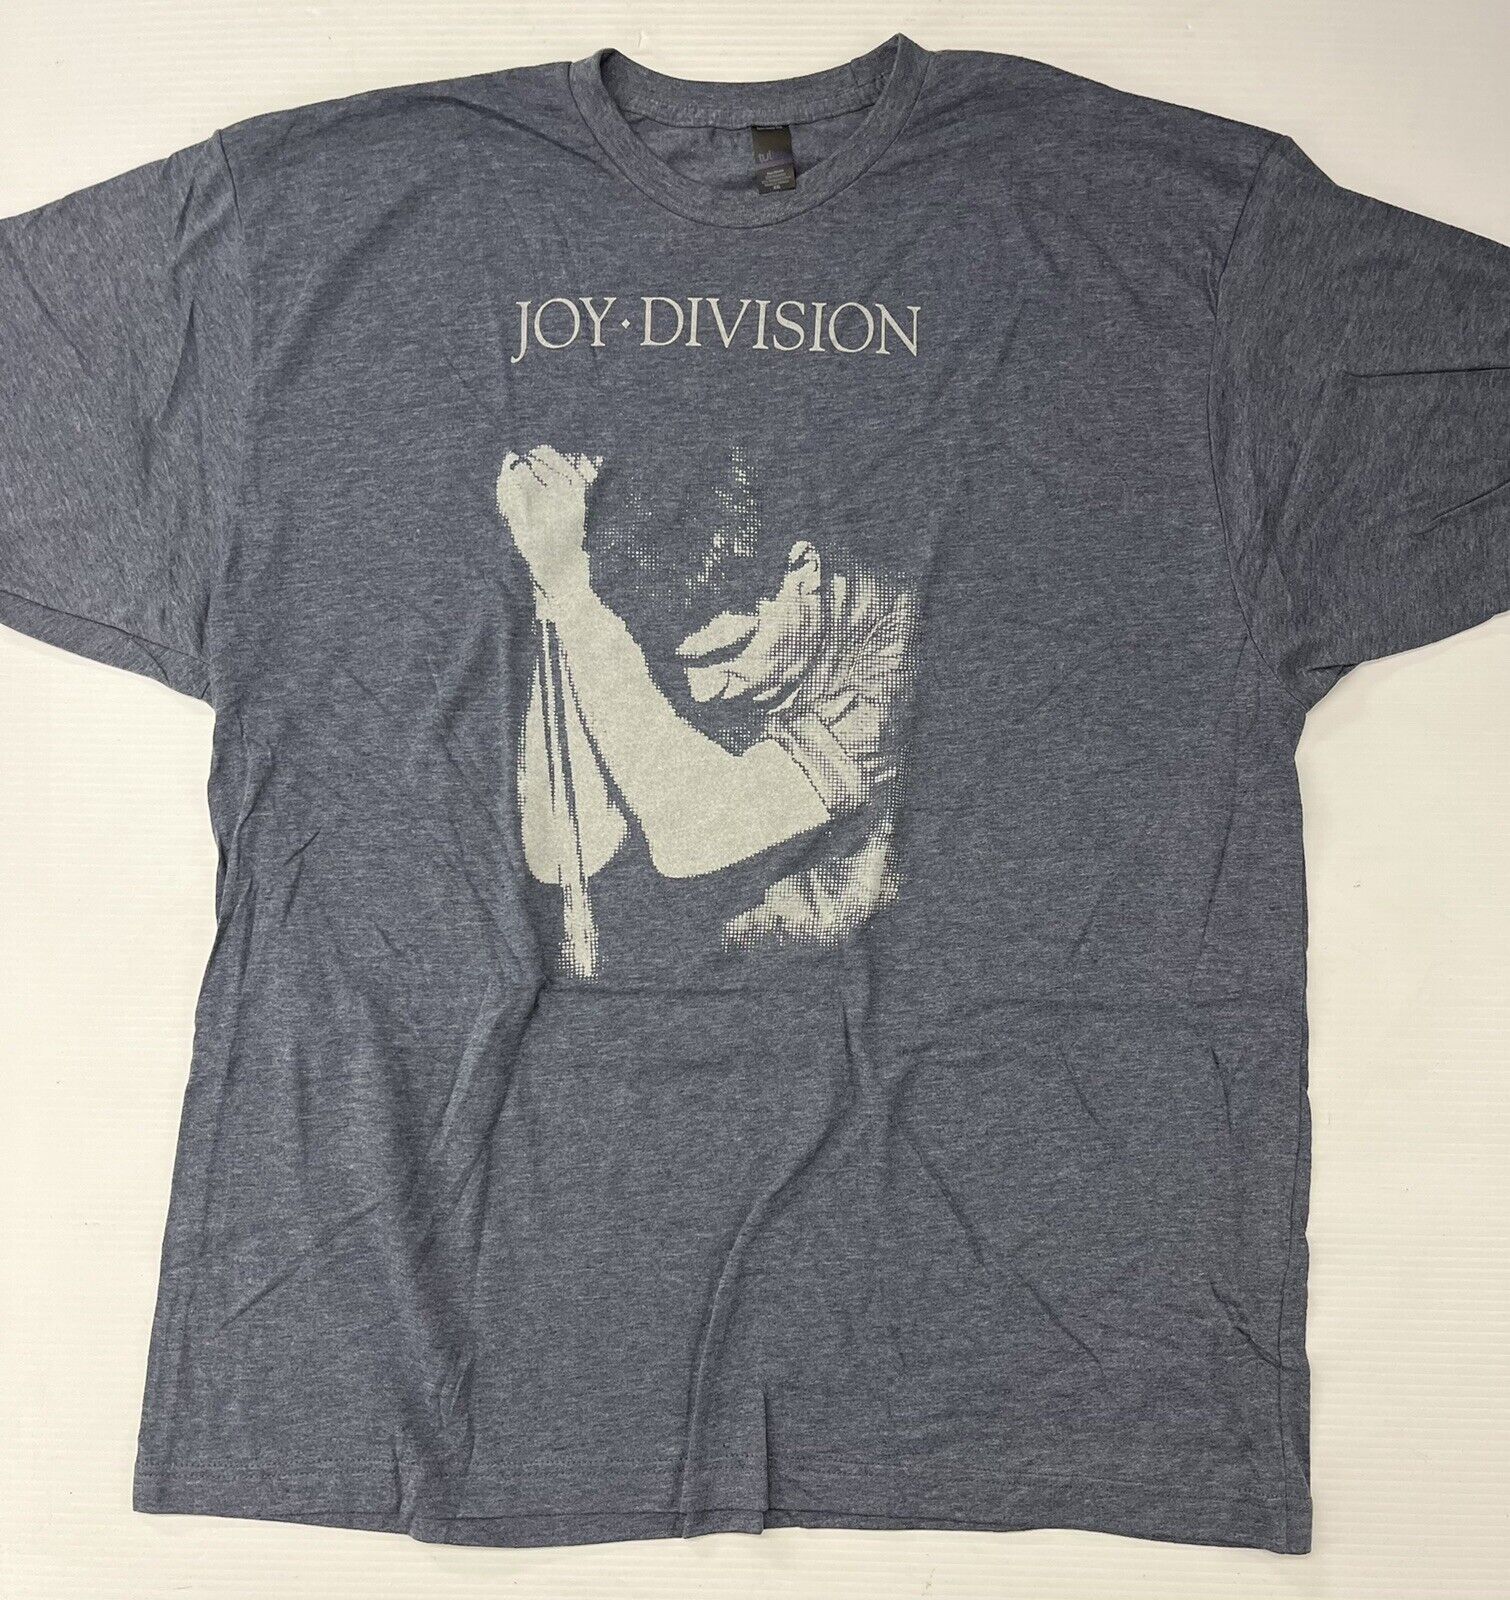 Joy Division - Ian Curtis Gray T-shirt - Size 2x-large New